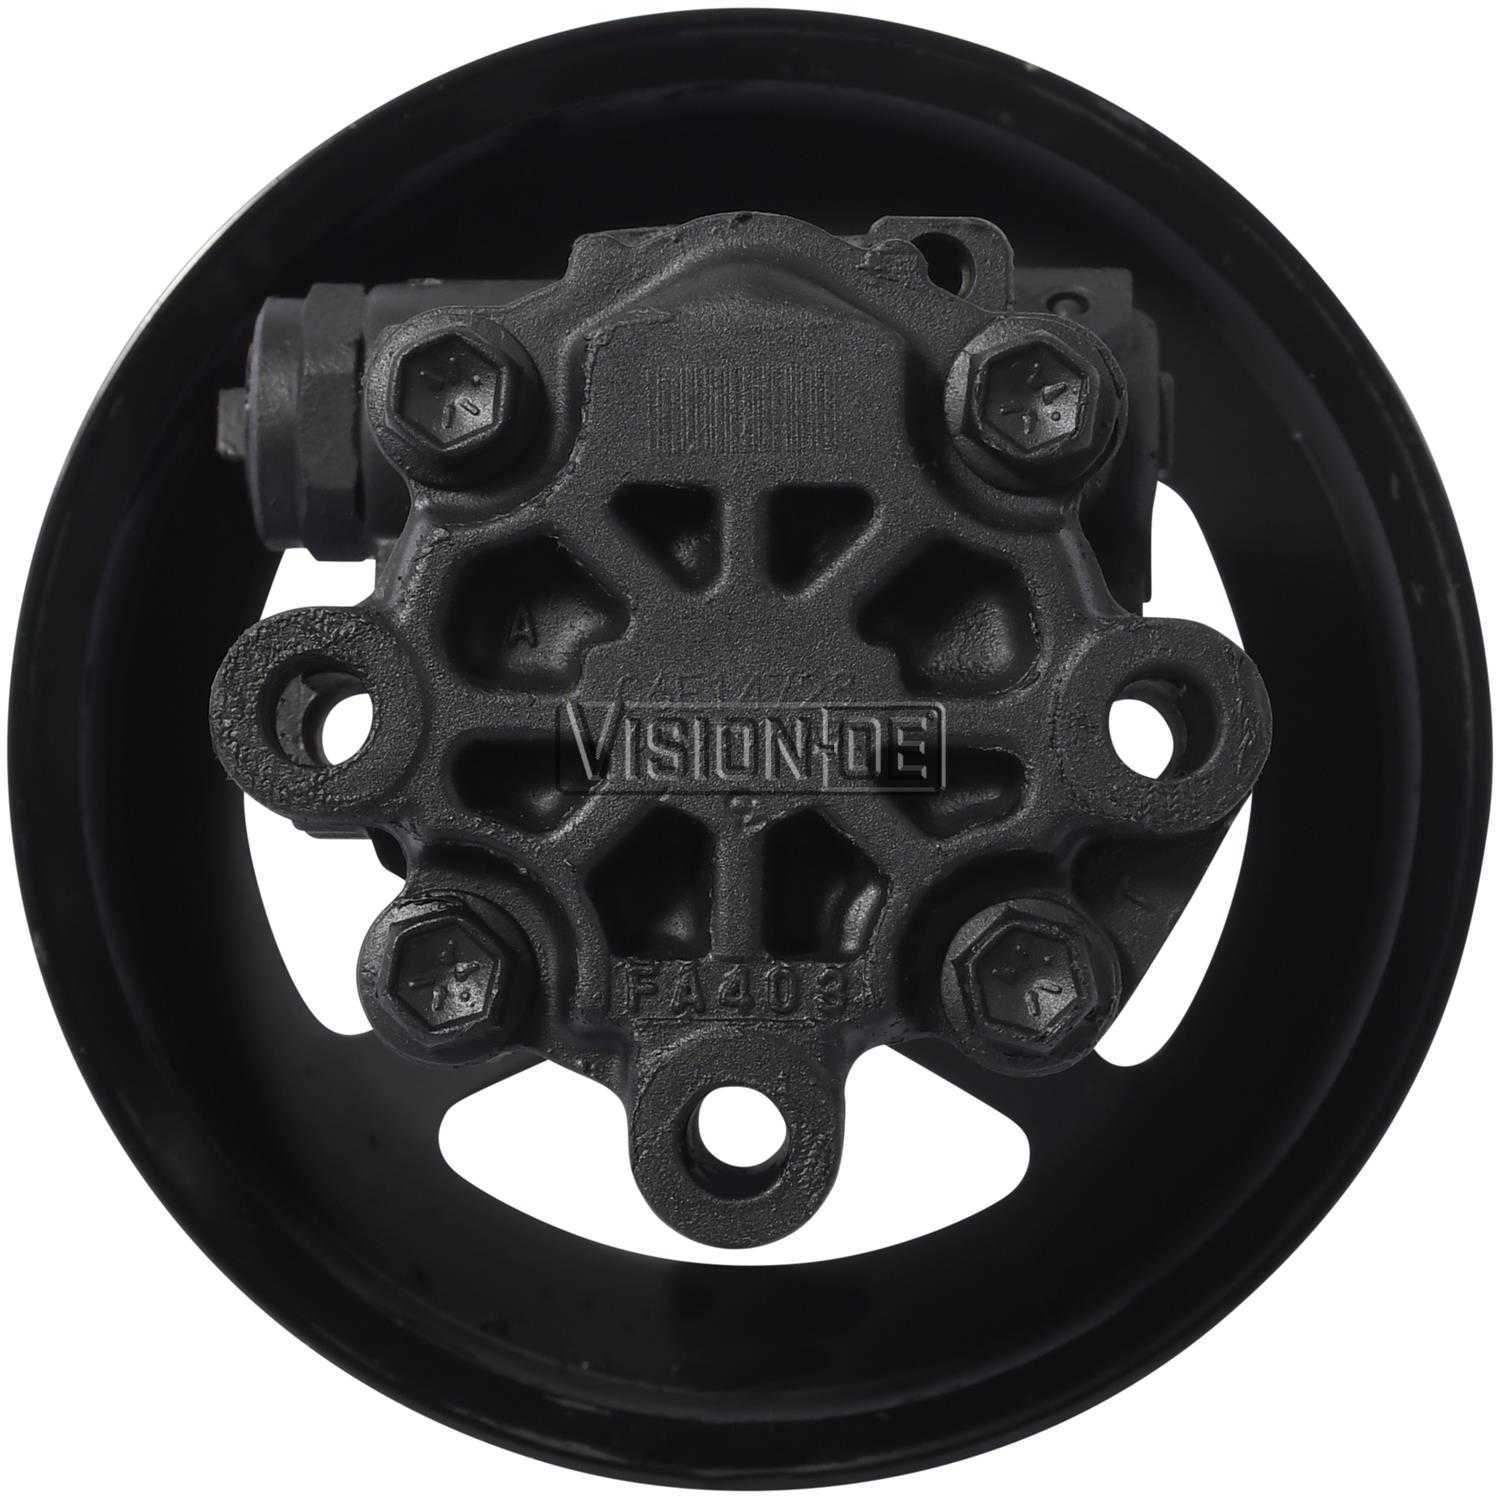 VISION-OE - Reman Power Steering Pump - VOE 990-1336A1